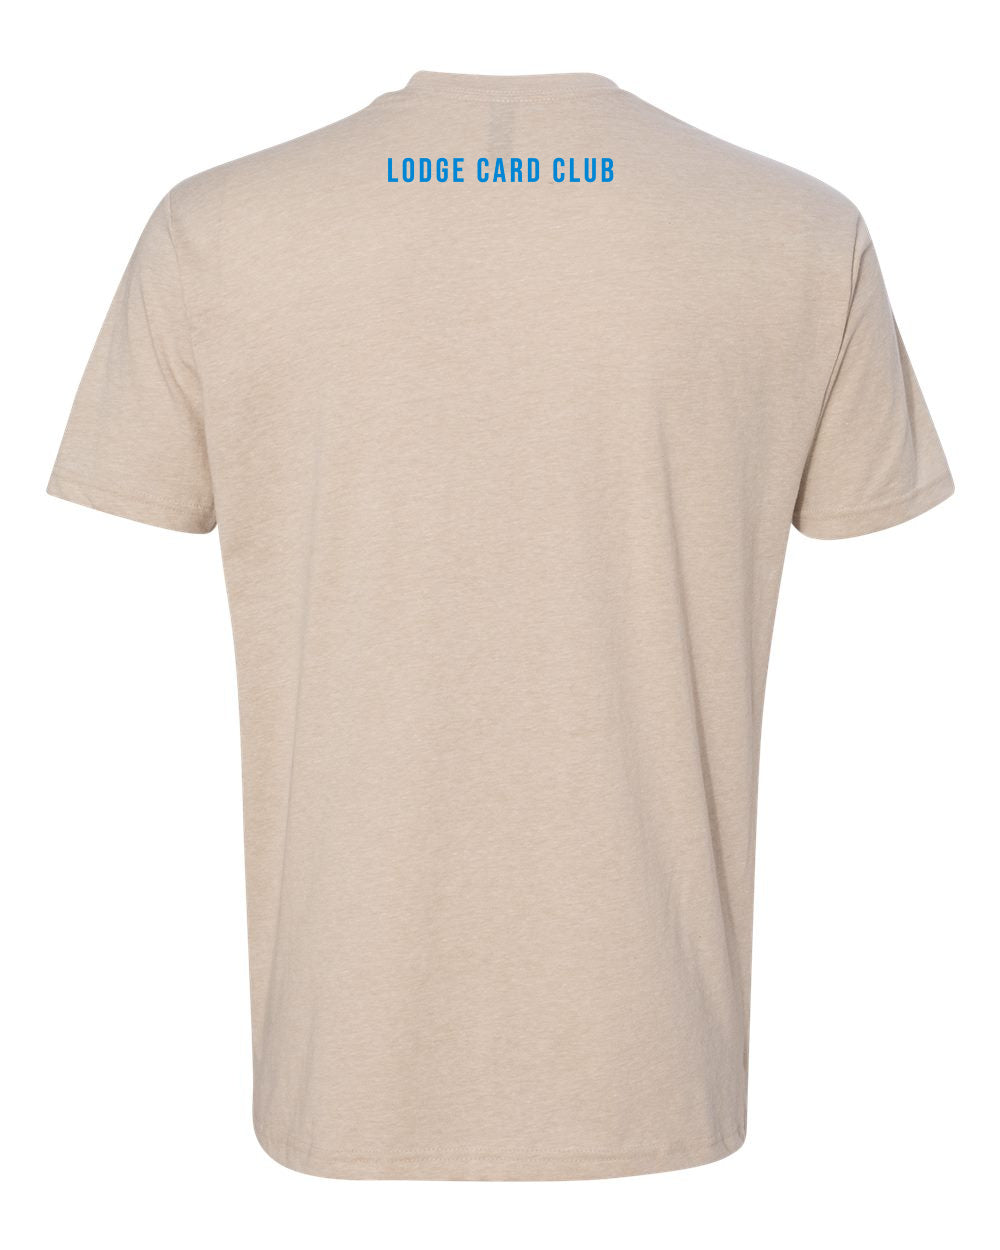 LCC Spade Shirt - Cream